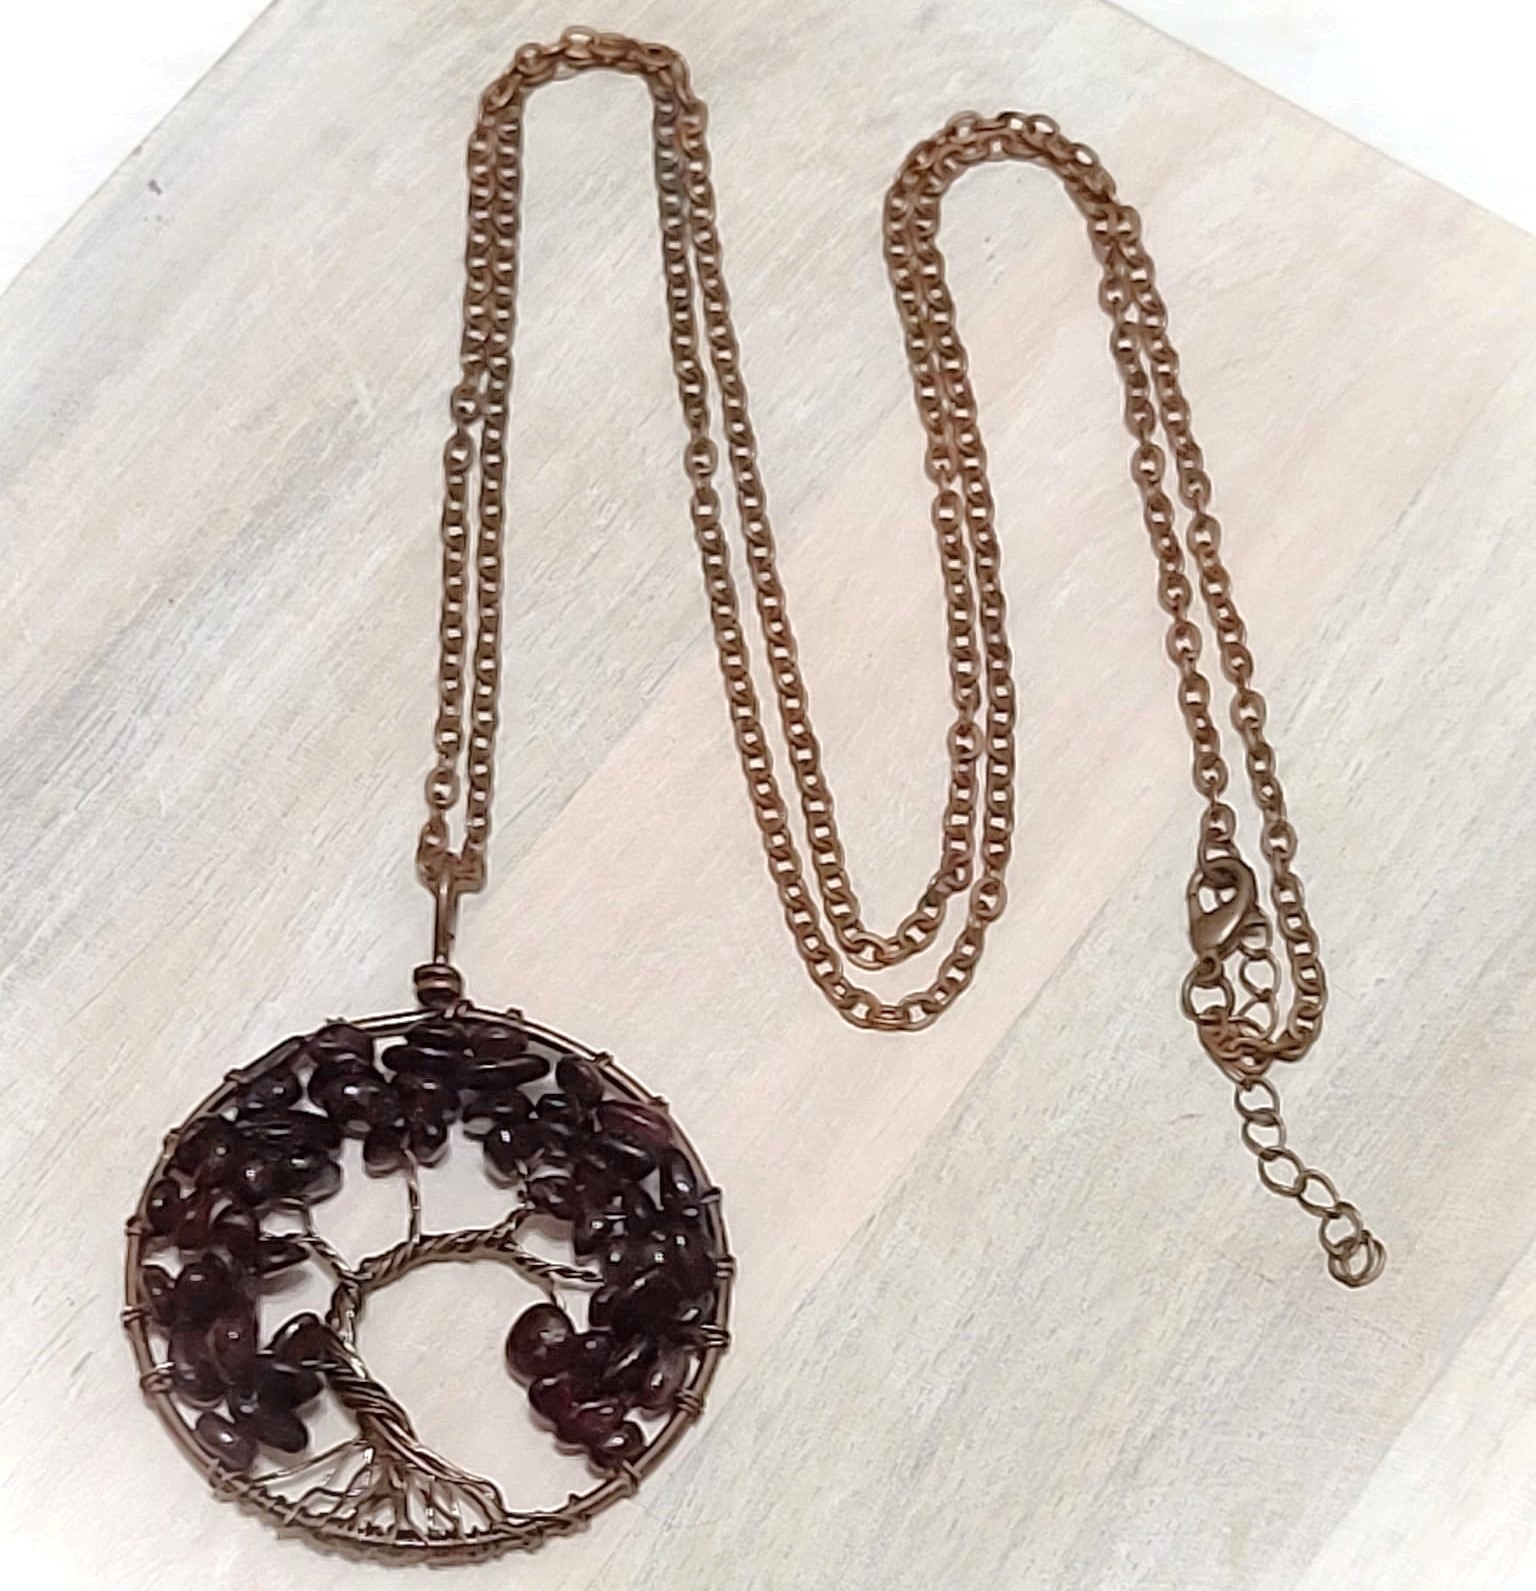 Tree of life pendant necklace, garnet gemstones w copper chain